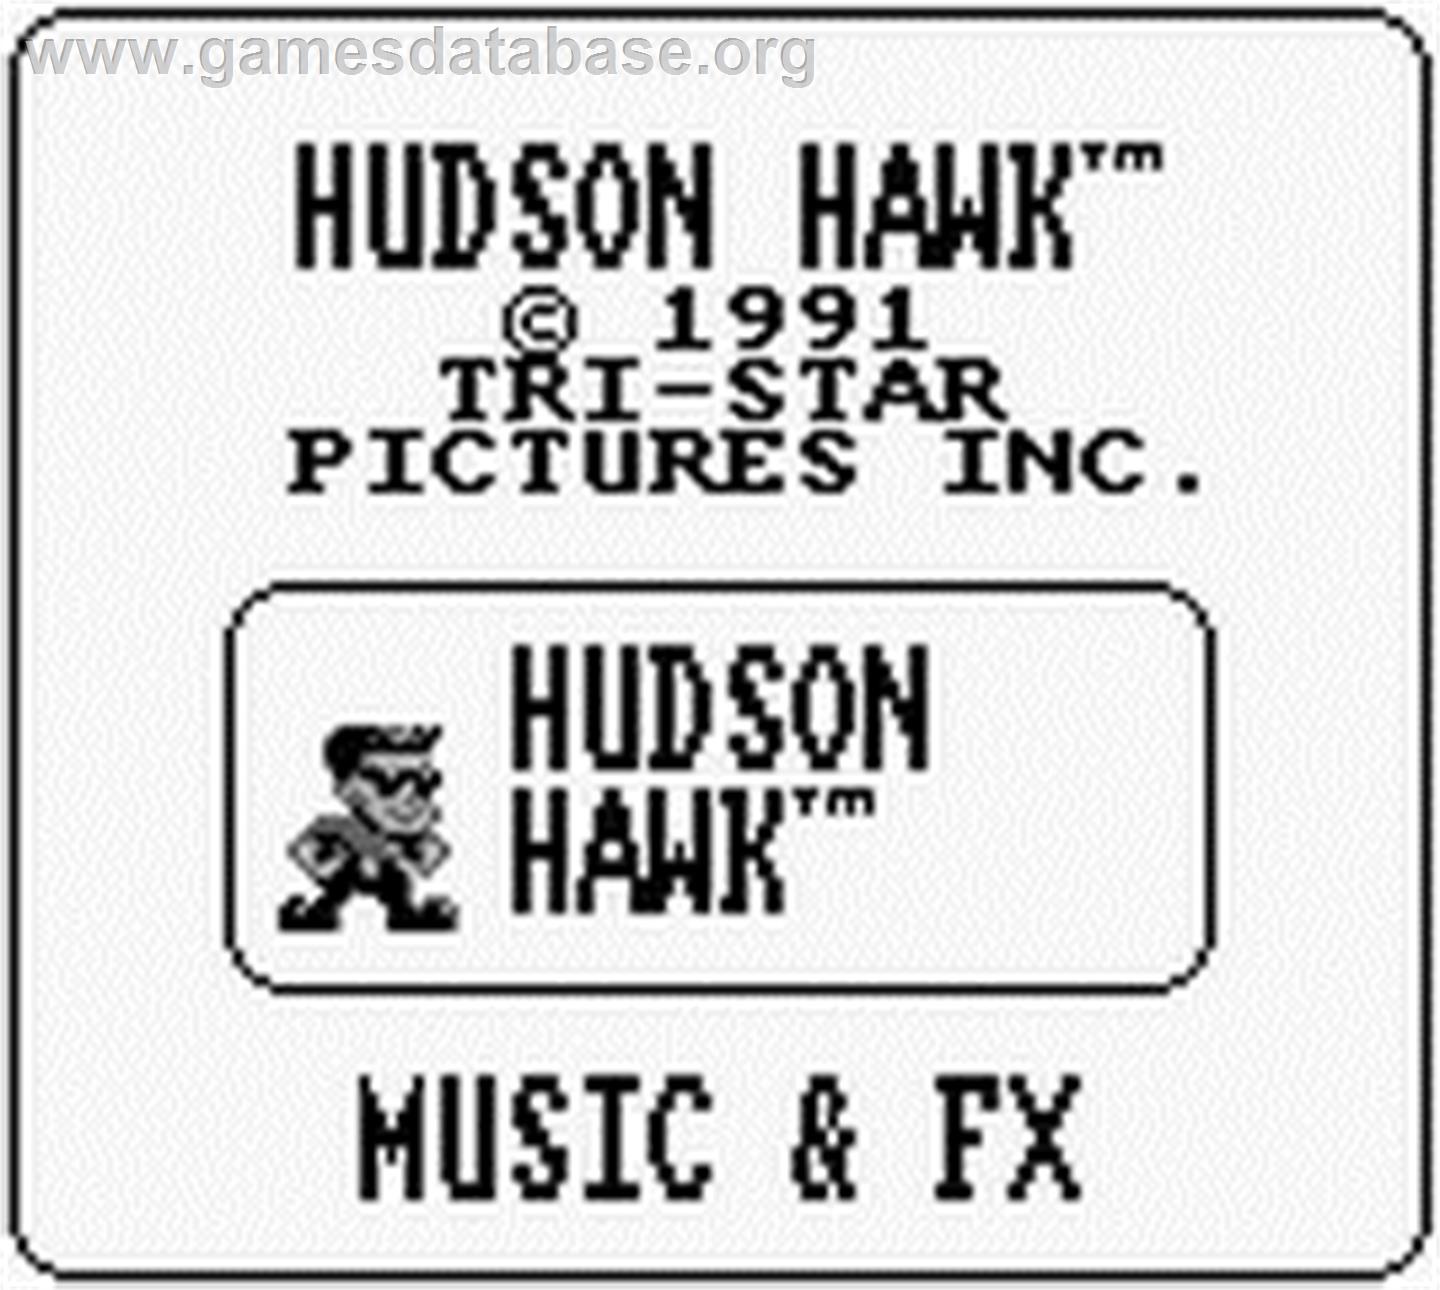 Hudson Hawk - Nintendo Game Boy - Artwork - Title Screen